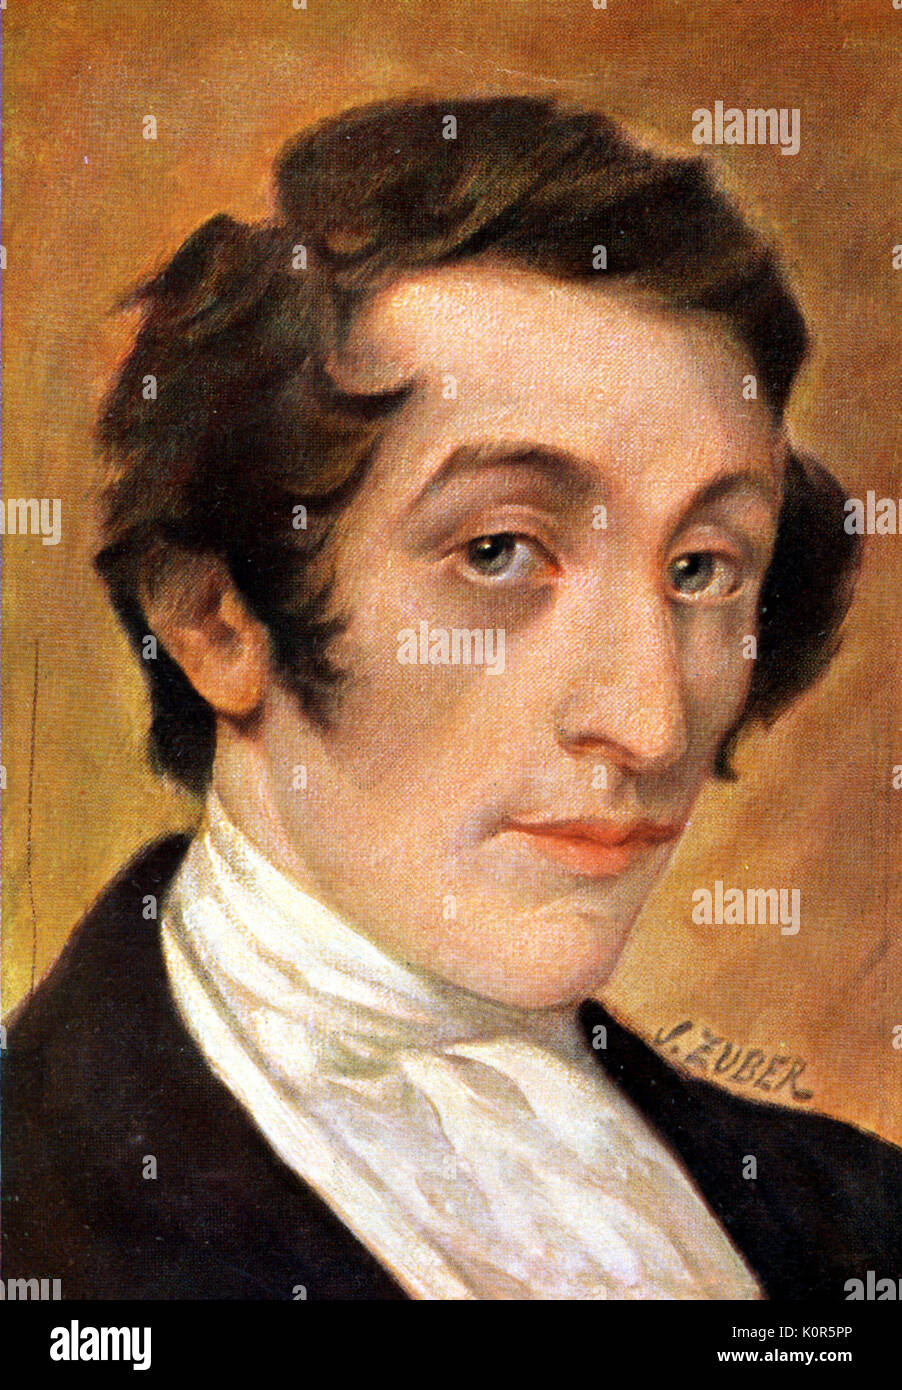 Carl Maria von Weber portrait. German composer, conductor, pianist and  critic 1786-1826 Stock Photo - Alamy